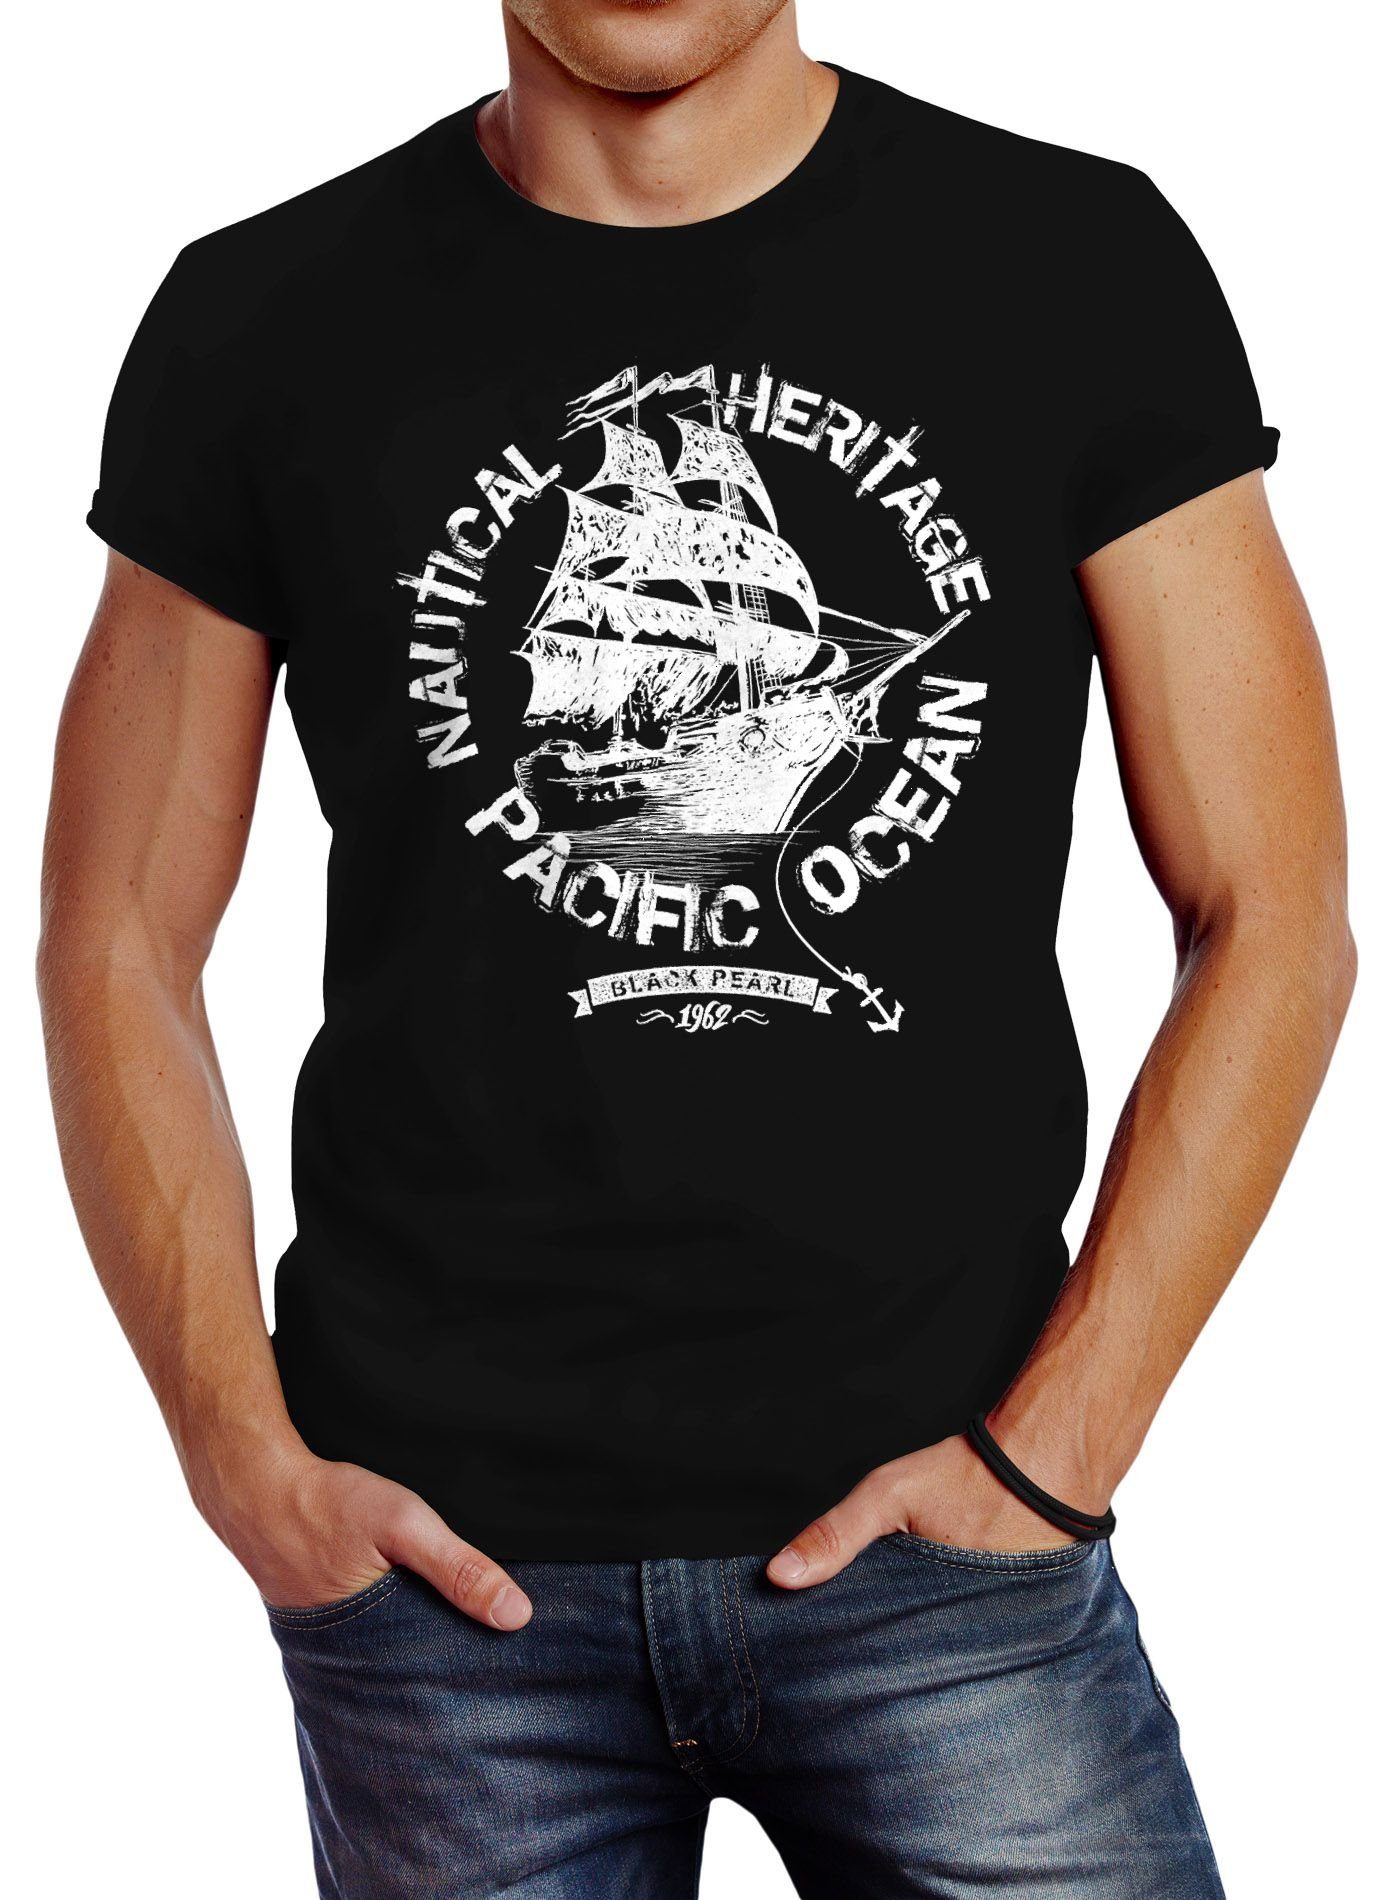 Neverless Print-Shirt Herren Fit schwarz Slim mit T-Shirt Neverless® Segelschiff Piratenschiff Print